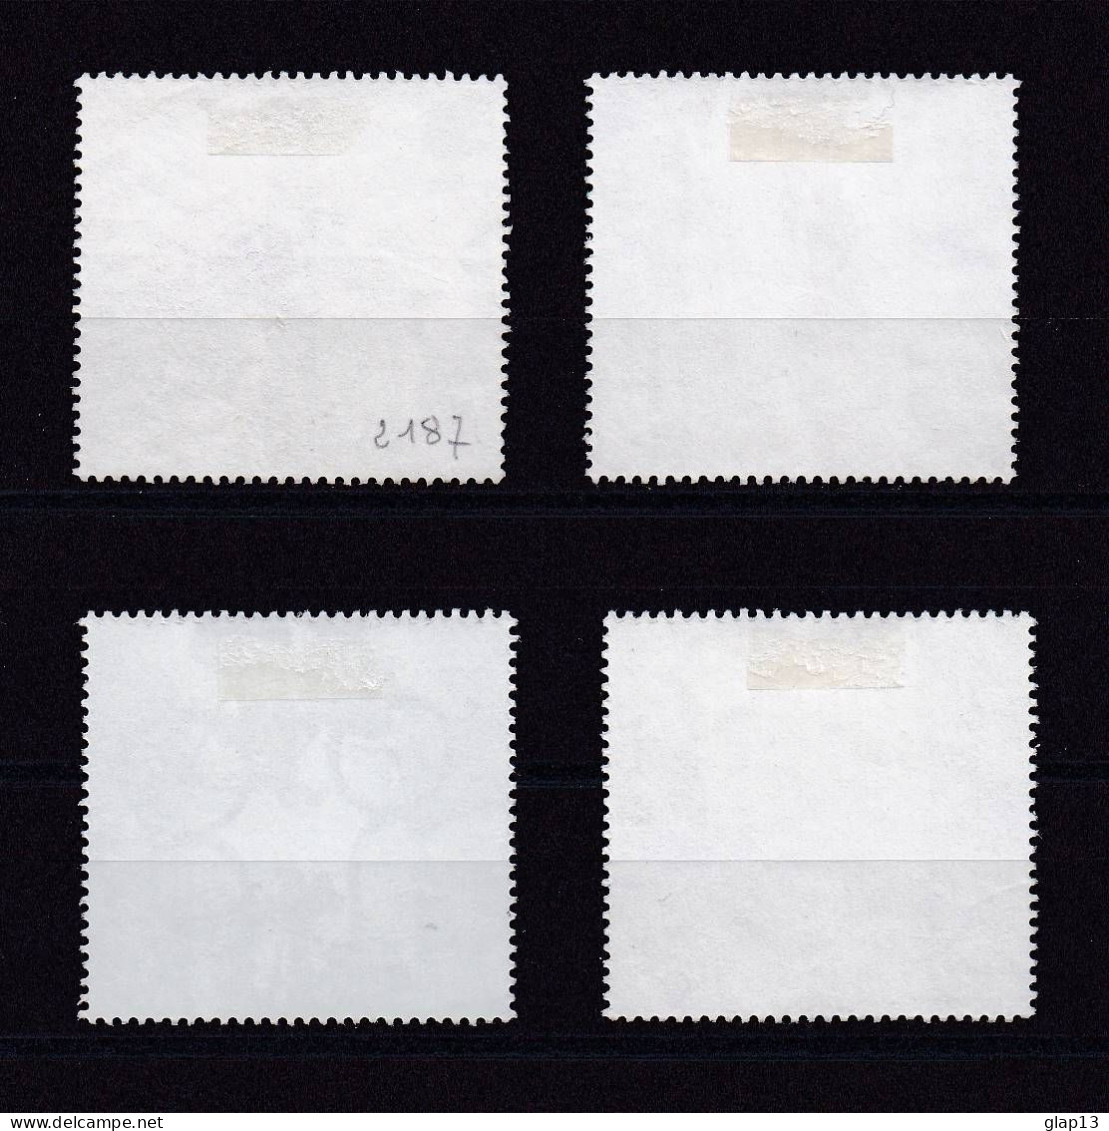 GRANDE-BRETAGNE 2000 TIMBRE N°2187/90 OBLITERE NOUVEAU MILLENAIRE - Used Stamps